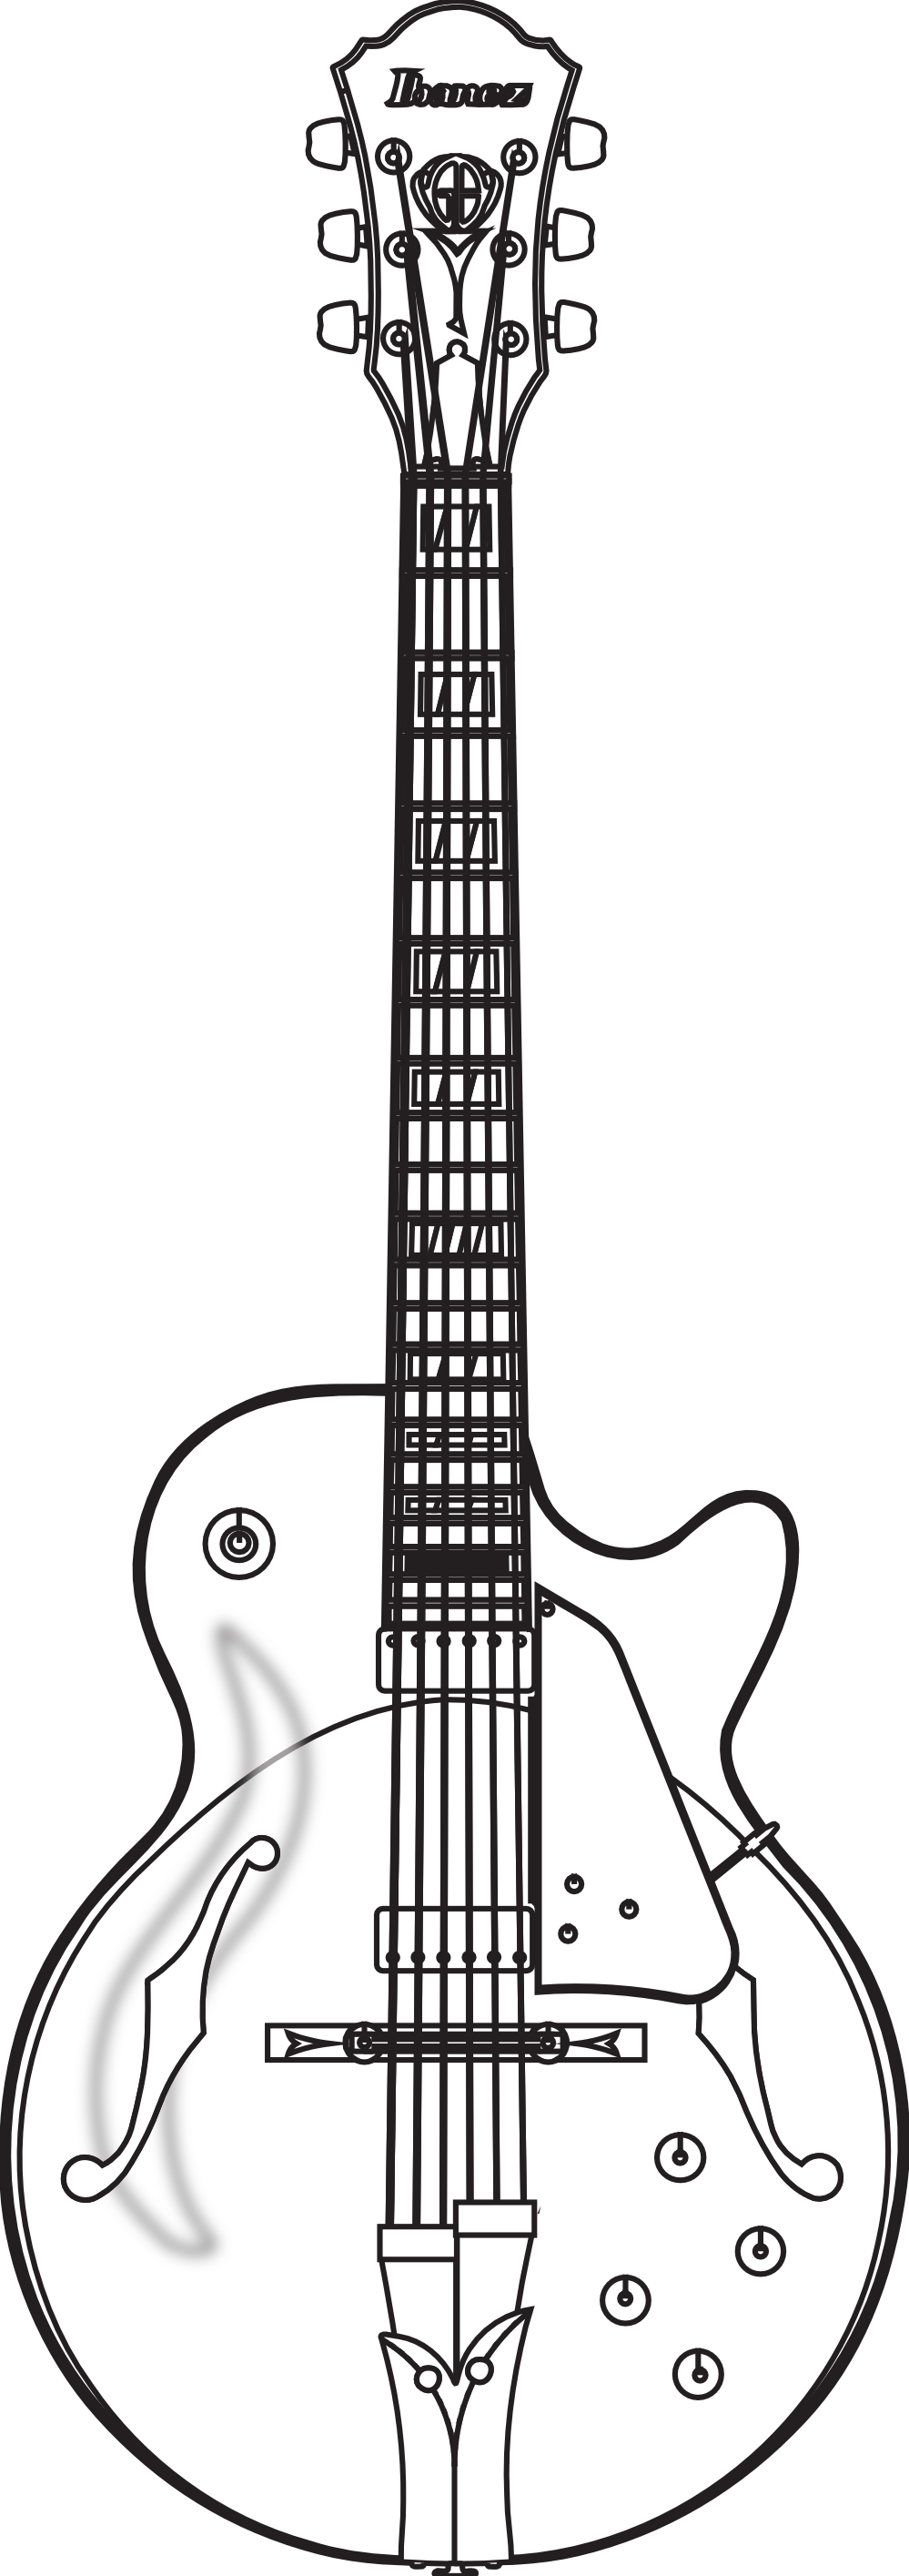 Ibanez Gb Brut Guitar Black White Art SVG colouringbook.